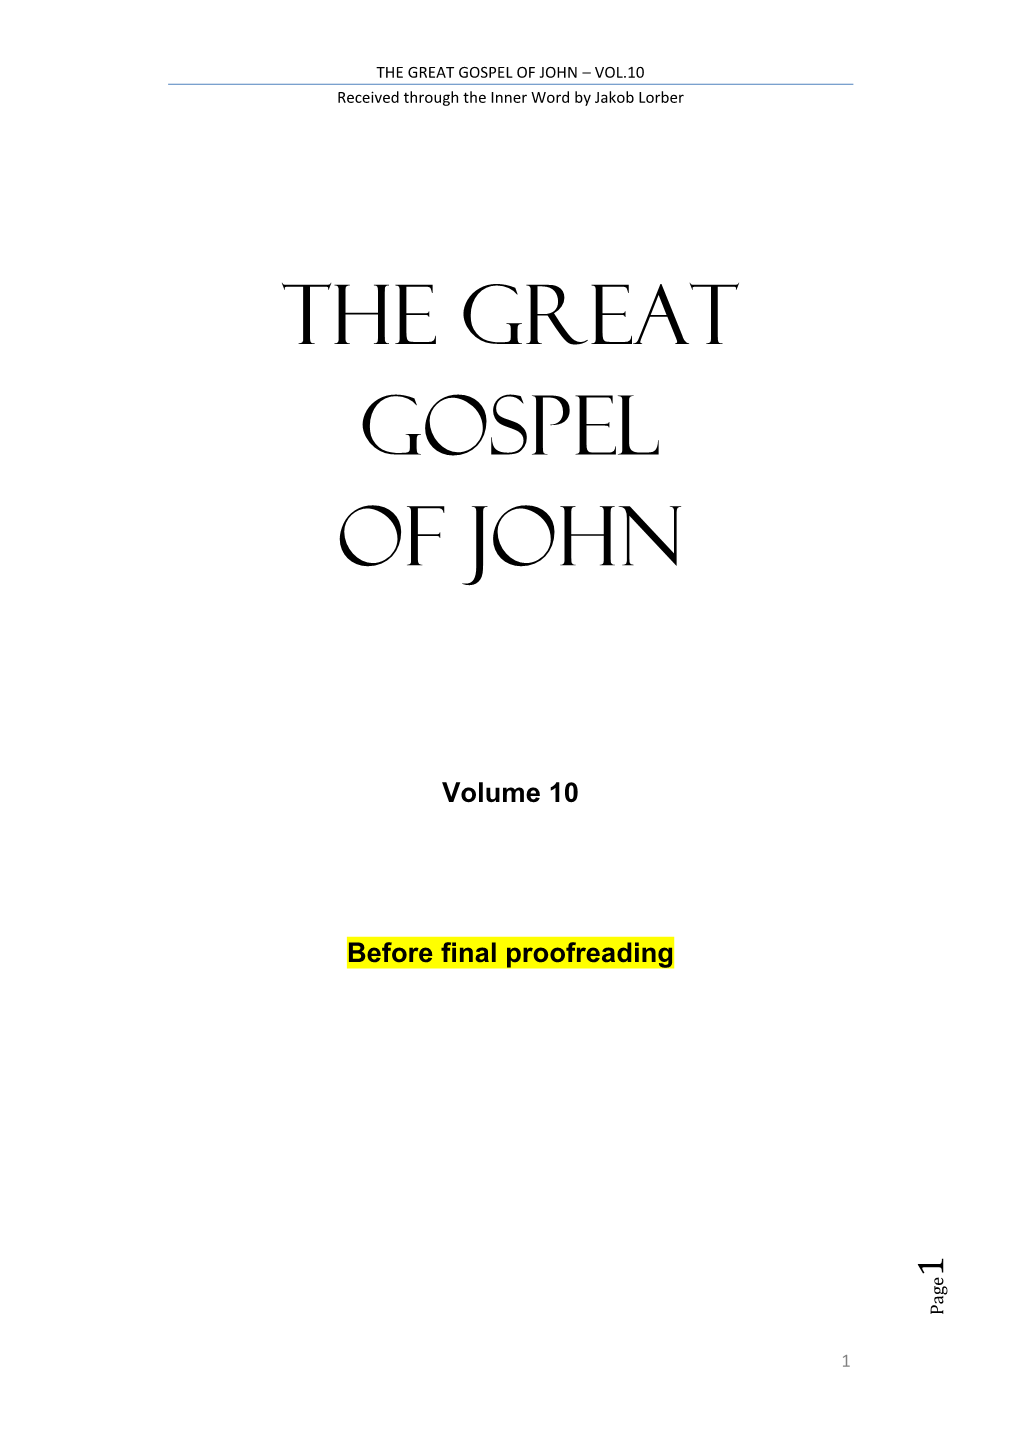 Jakob Lorber – the Great Gospel of John Vol X